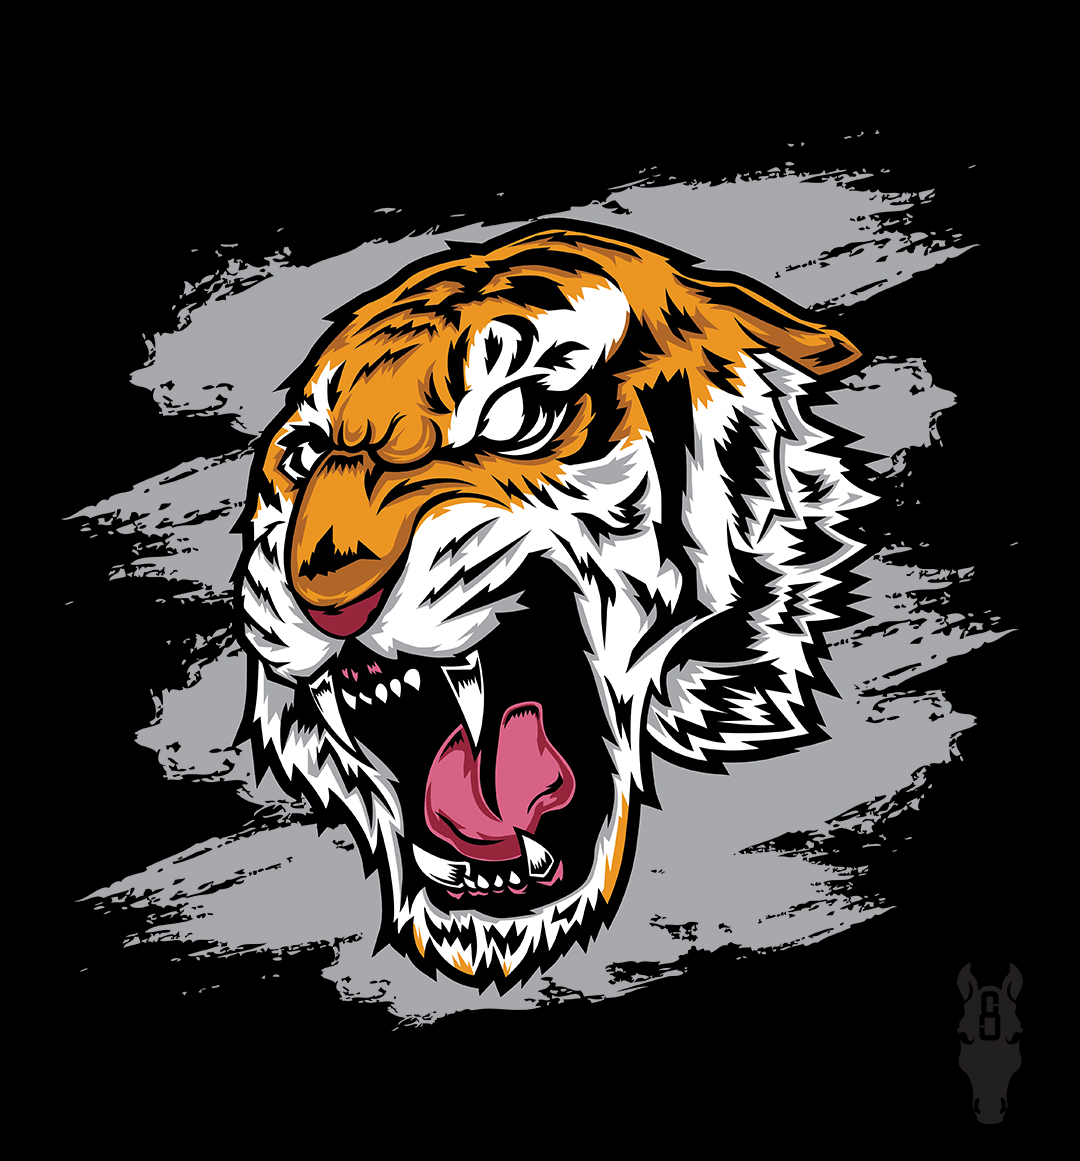 Tiger Jersey on Behance